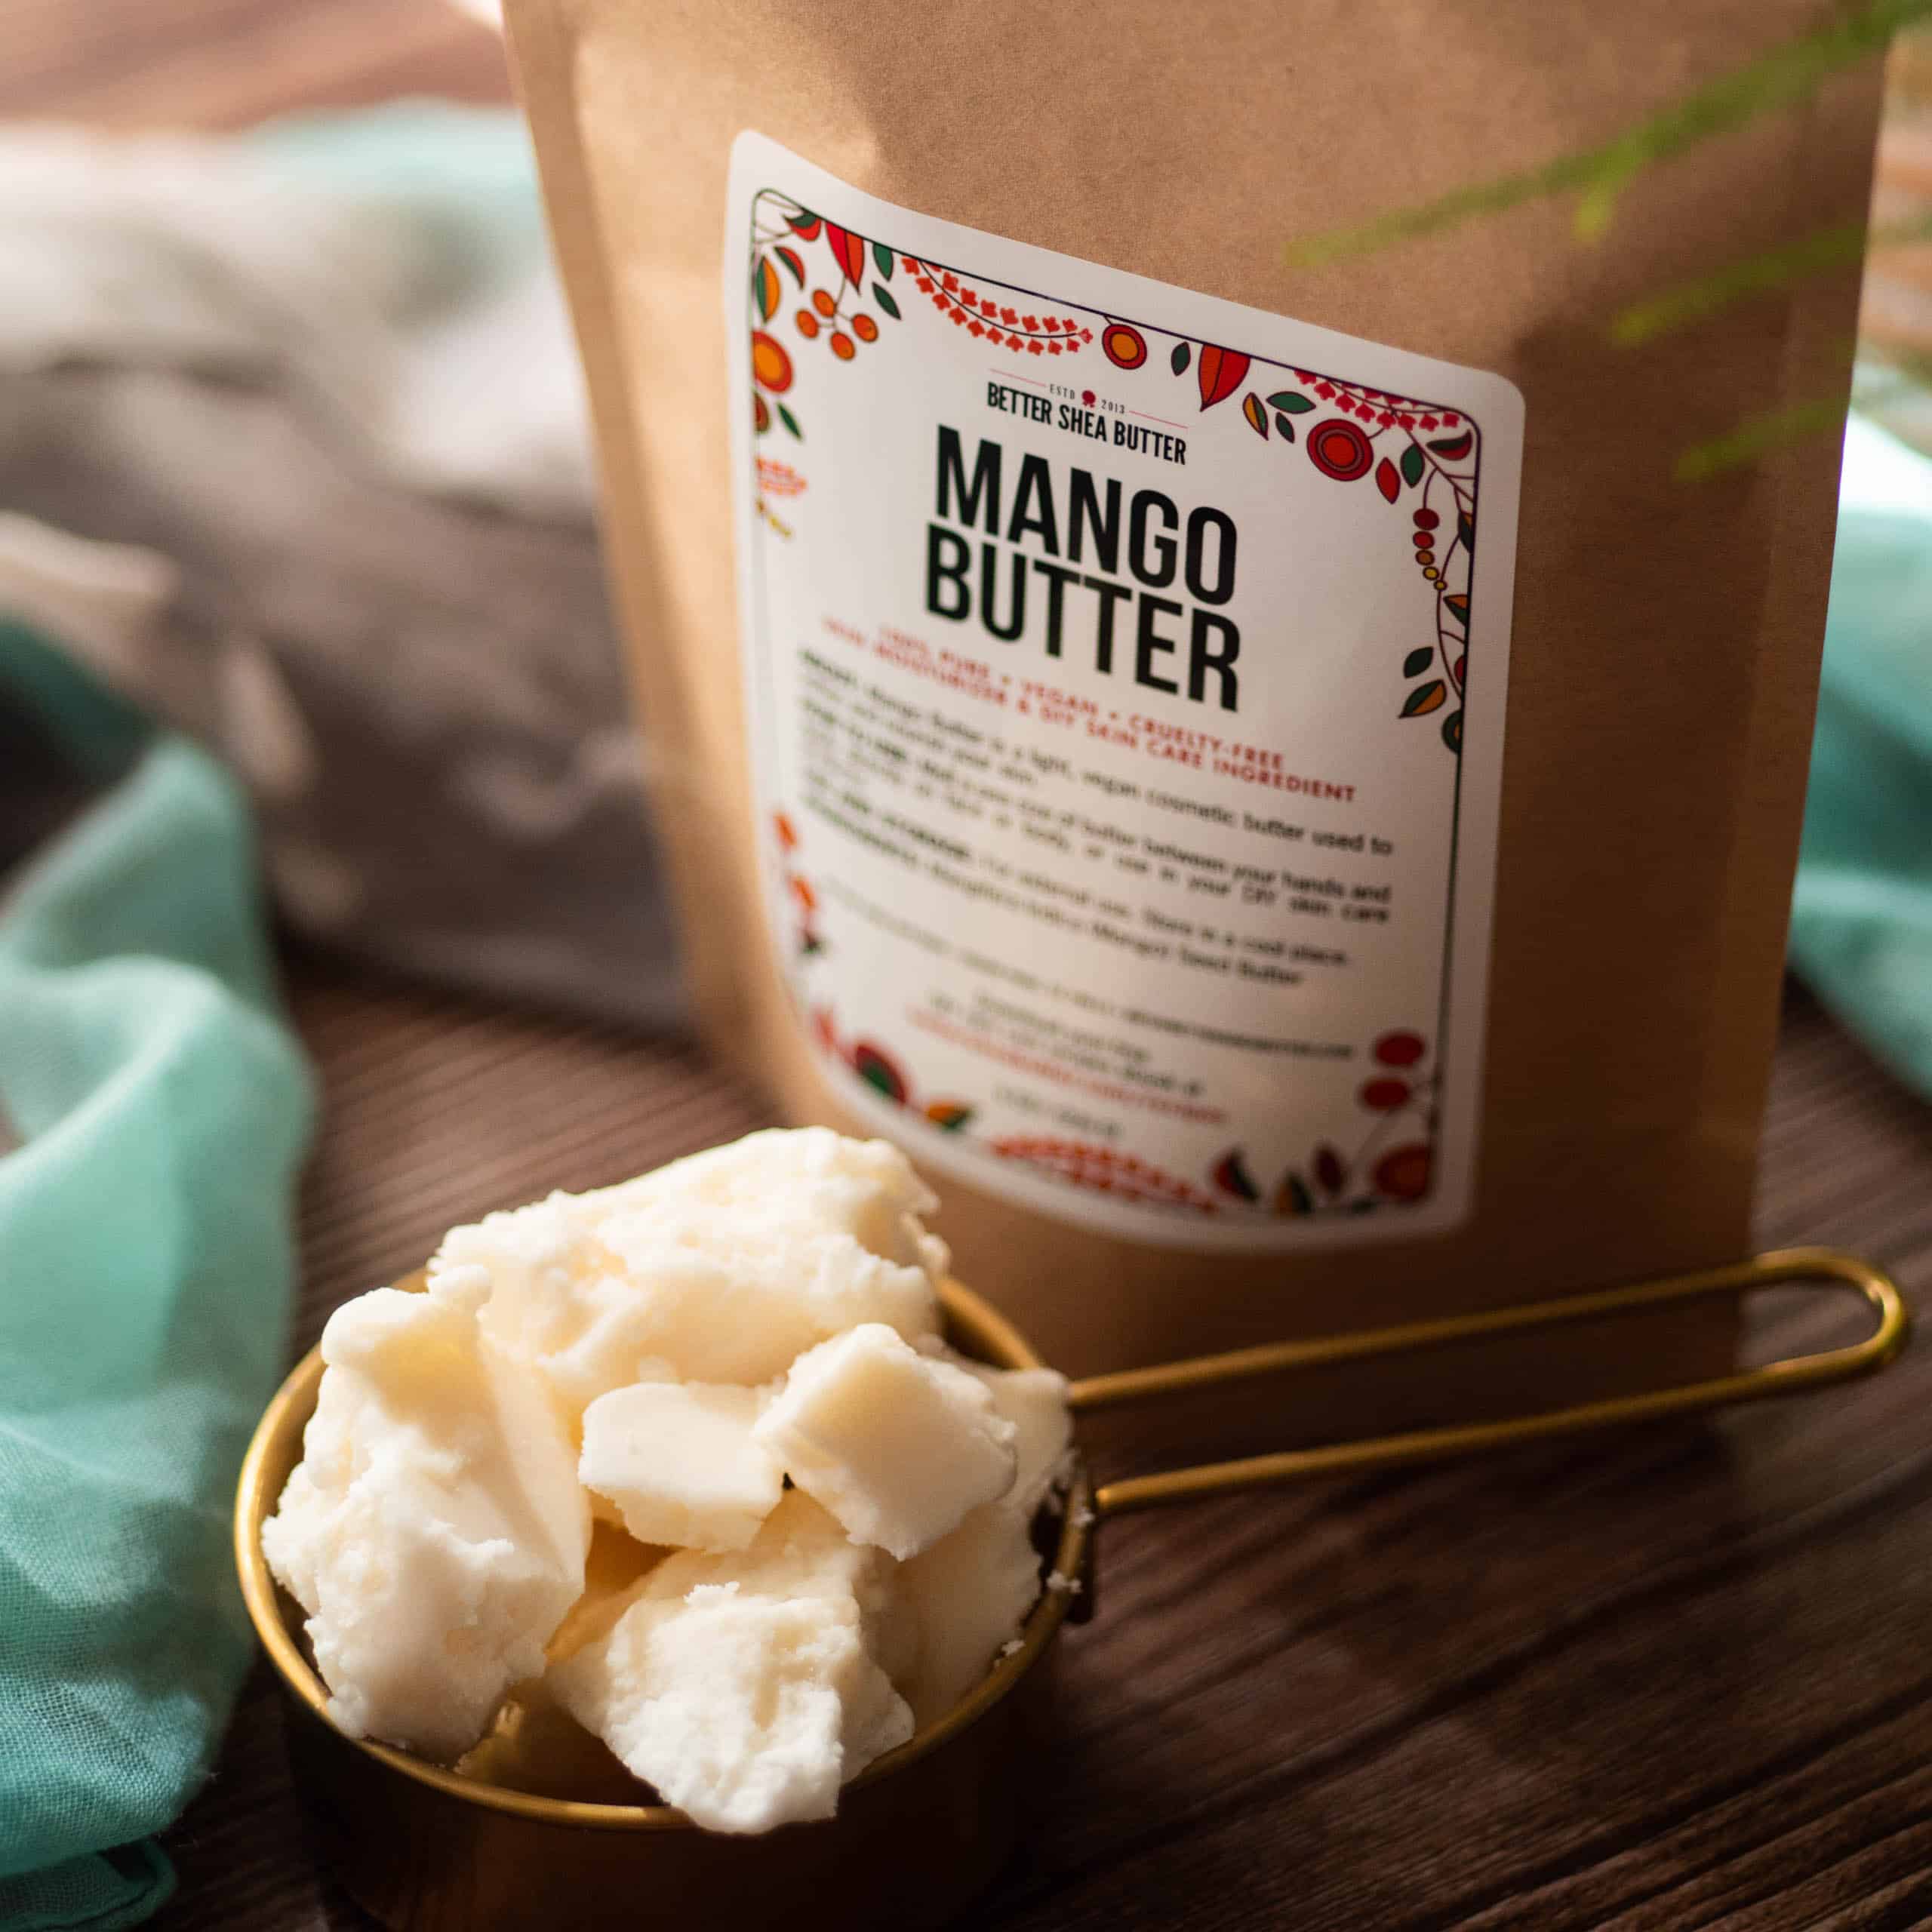  Bare Botanics Pure & Raw Mango Body Butter (Unscented) 16oz, Deeply Moisturizing & Hydrating Body Butter for Women